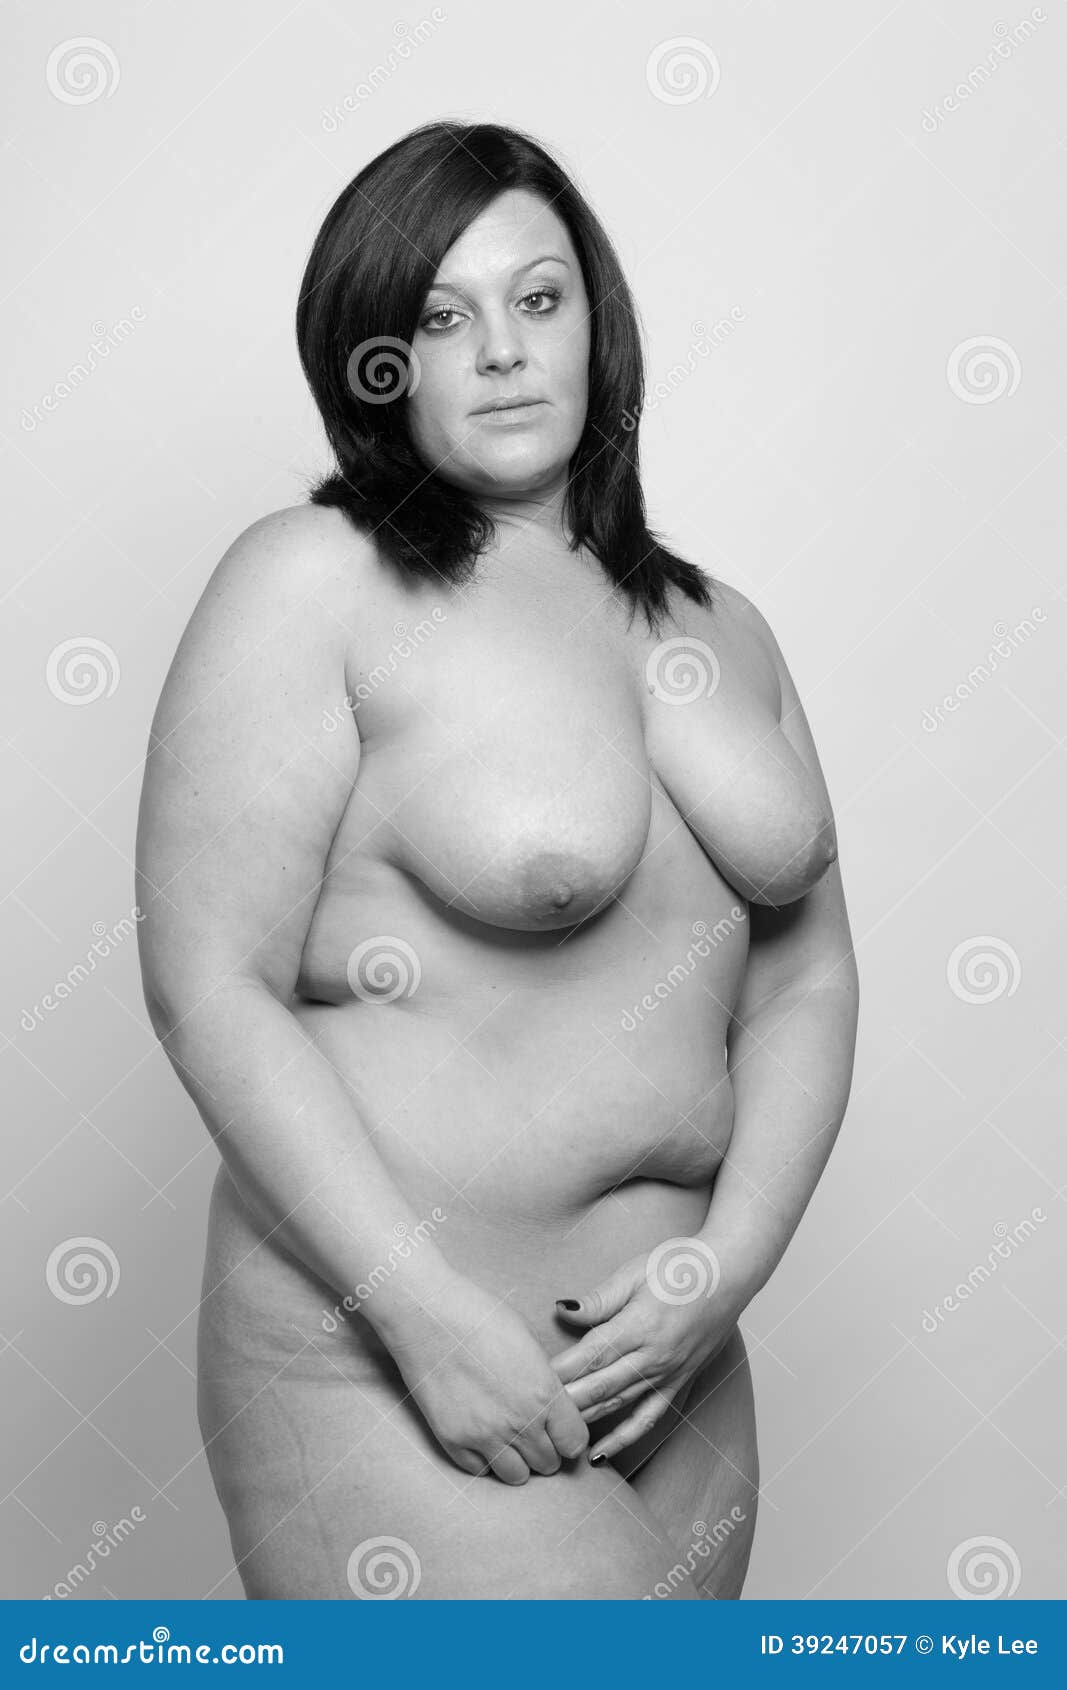 https://thumbs.dreamstime.com/z/sexy-nude-mature-plus-sized-woman-series-black-white-shots-shy-size-brunette-posing-studio-39247057.jpg